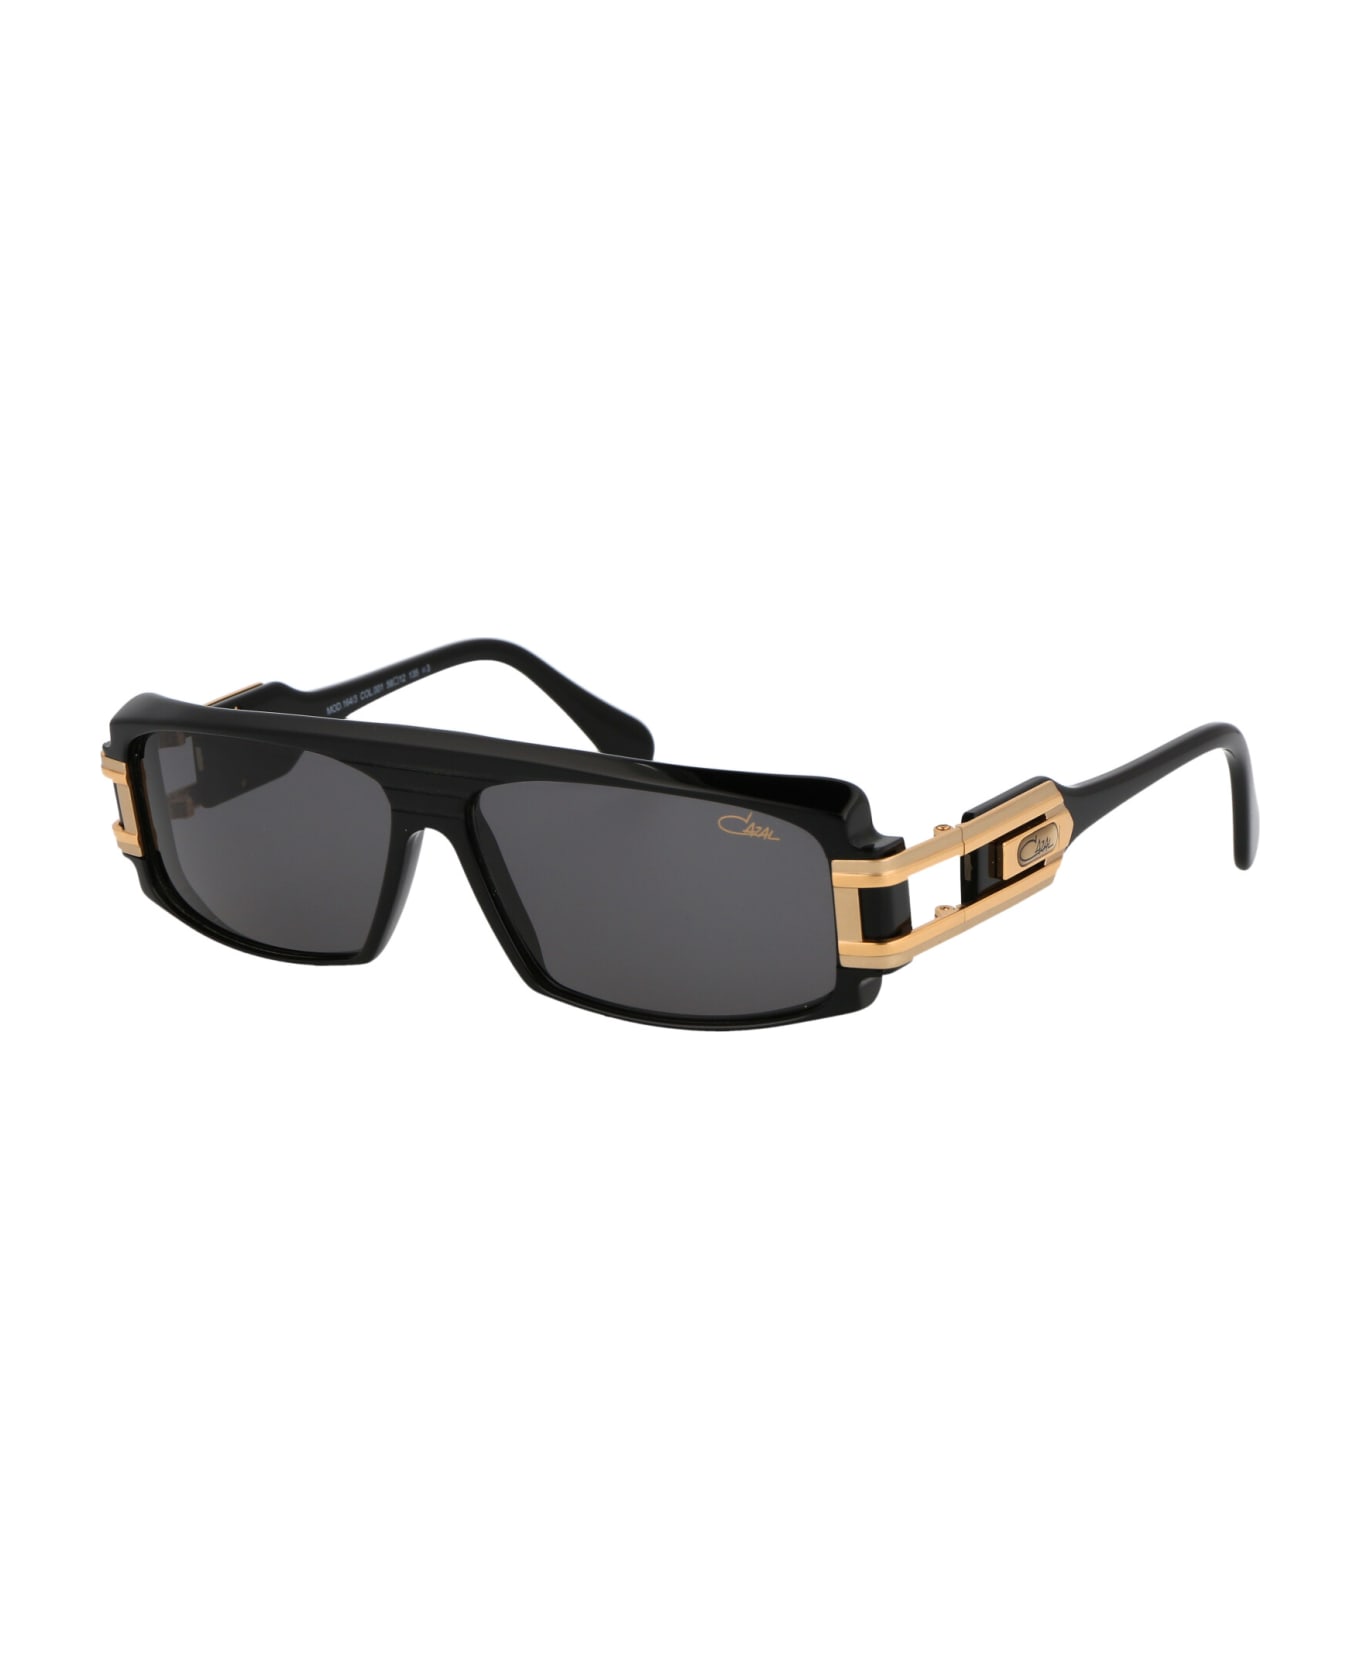 Cazal Mod. 164/3 Sunglasses - 001 BLACK